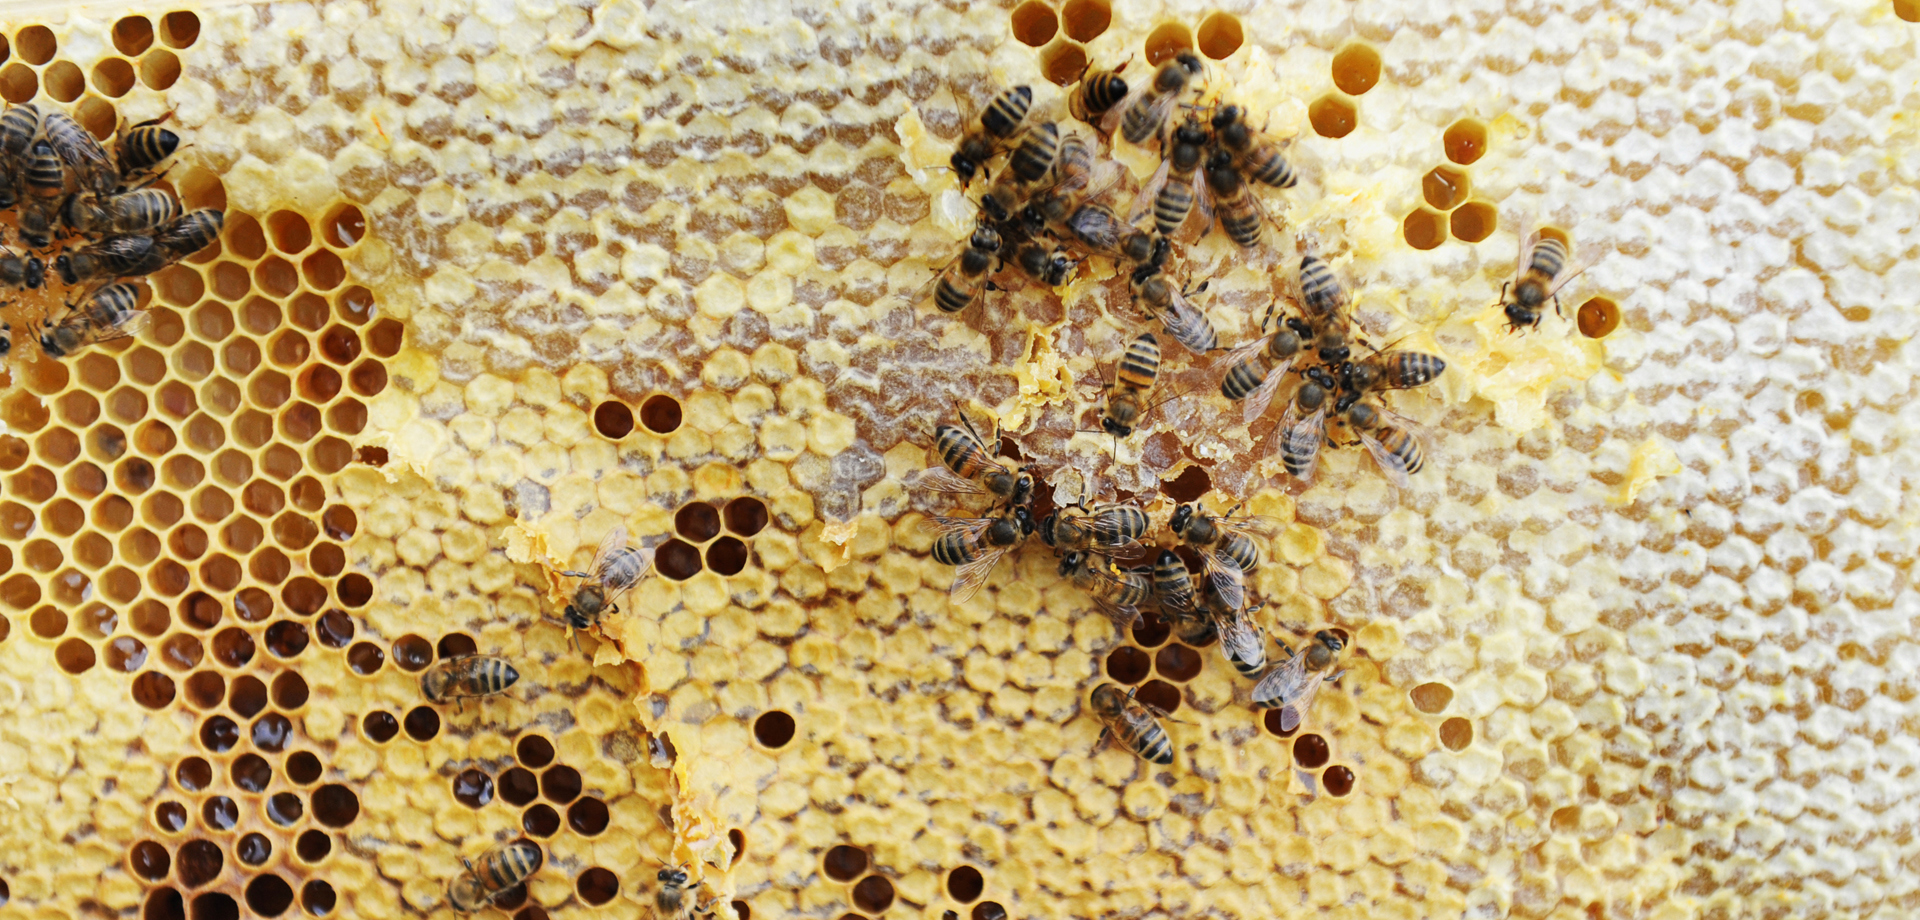 Estate bees